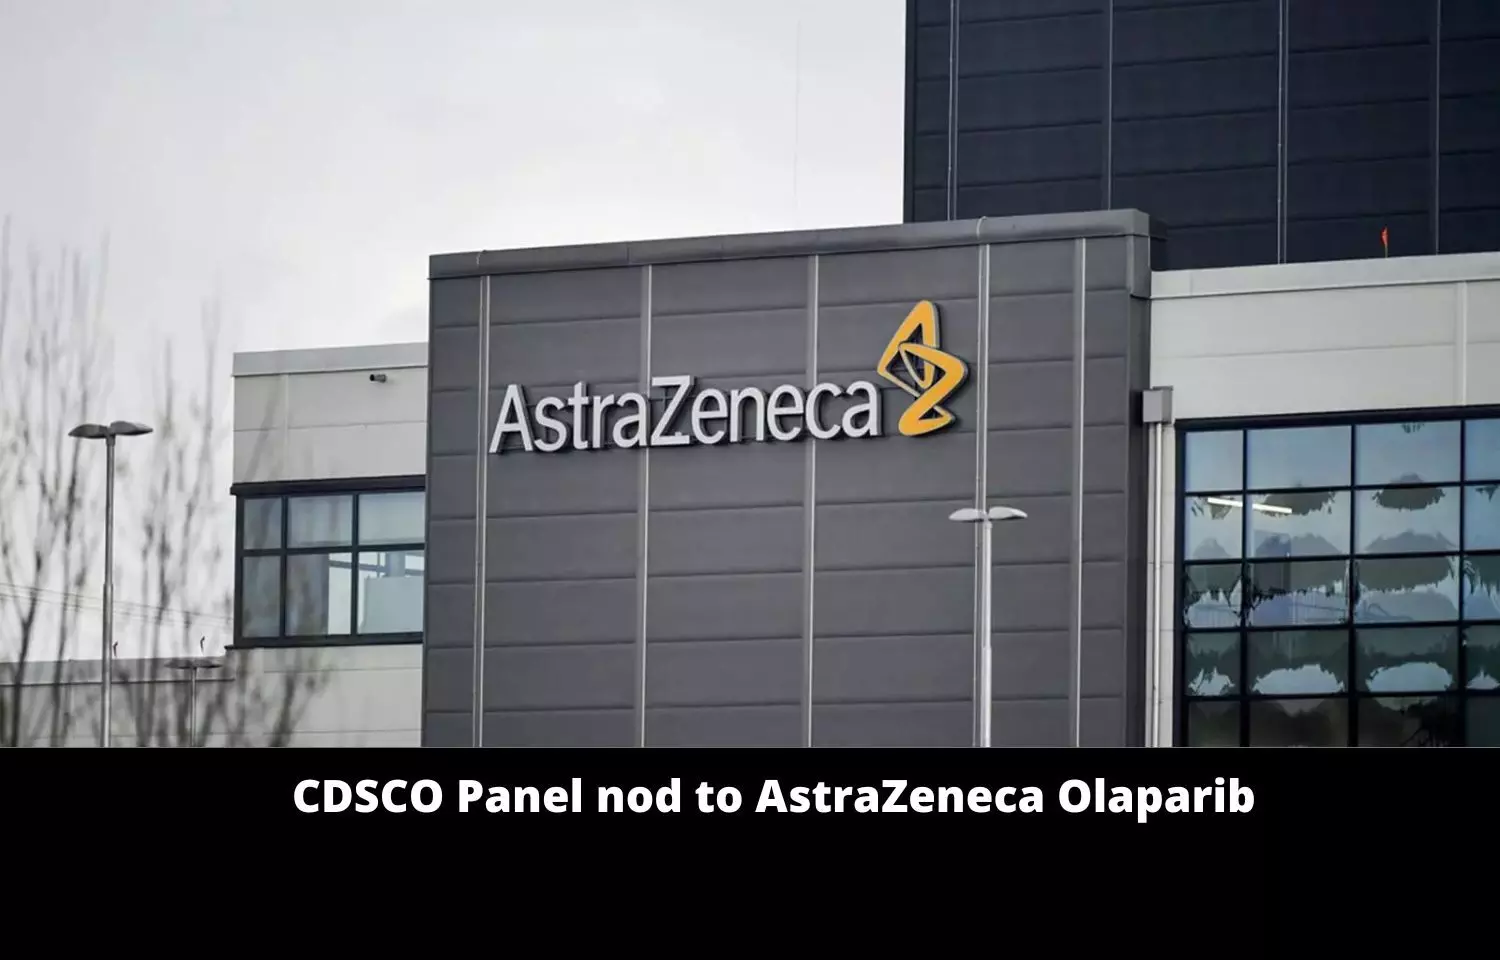 CDSCO Panel nod to AstraZeneca Olaparib for BRCA Mutated HER2 Negative Breast Cancer